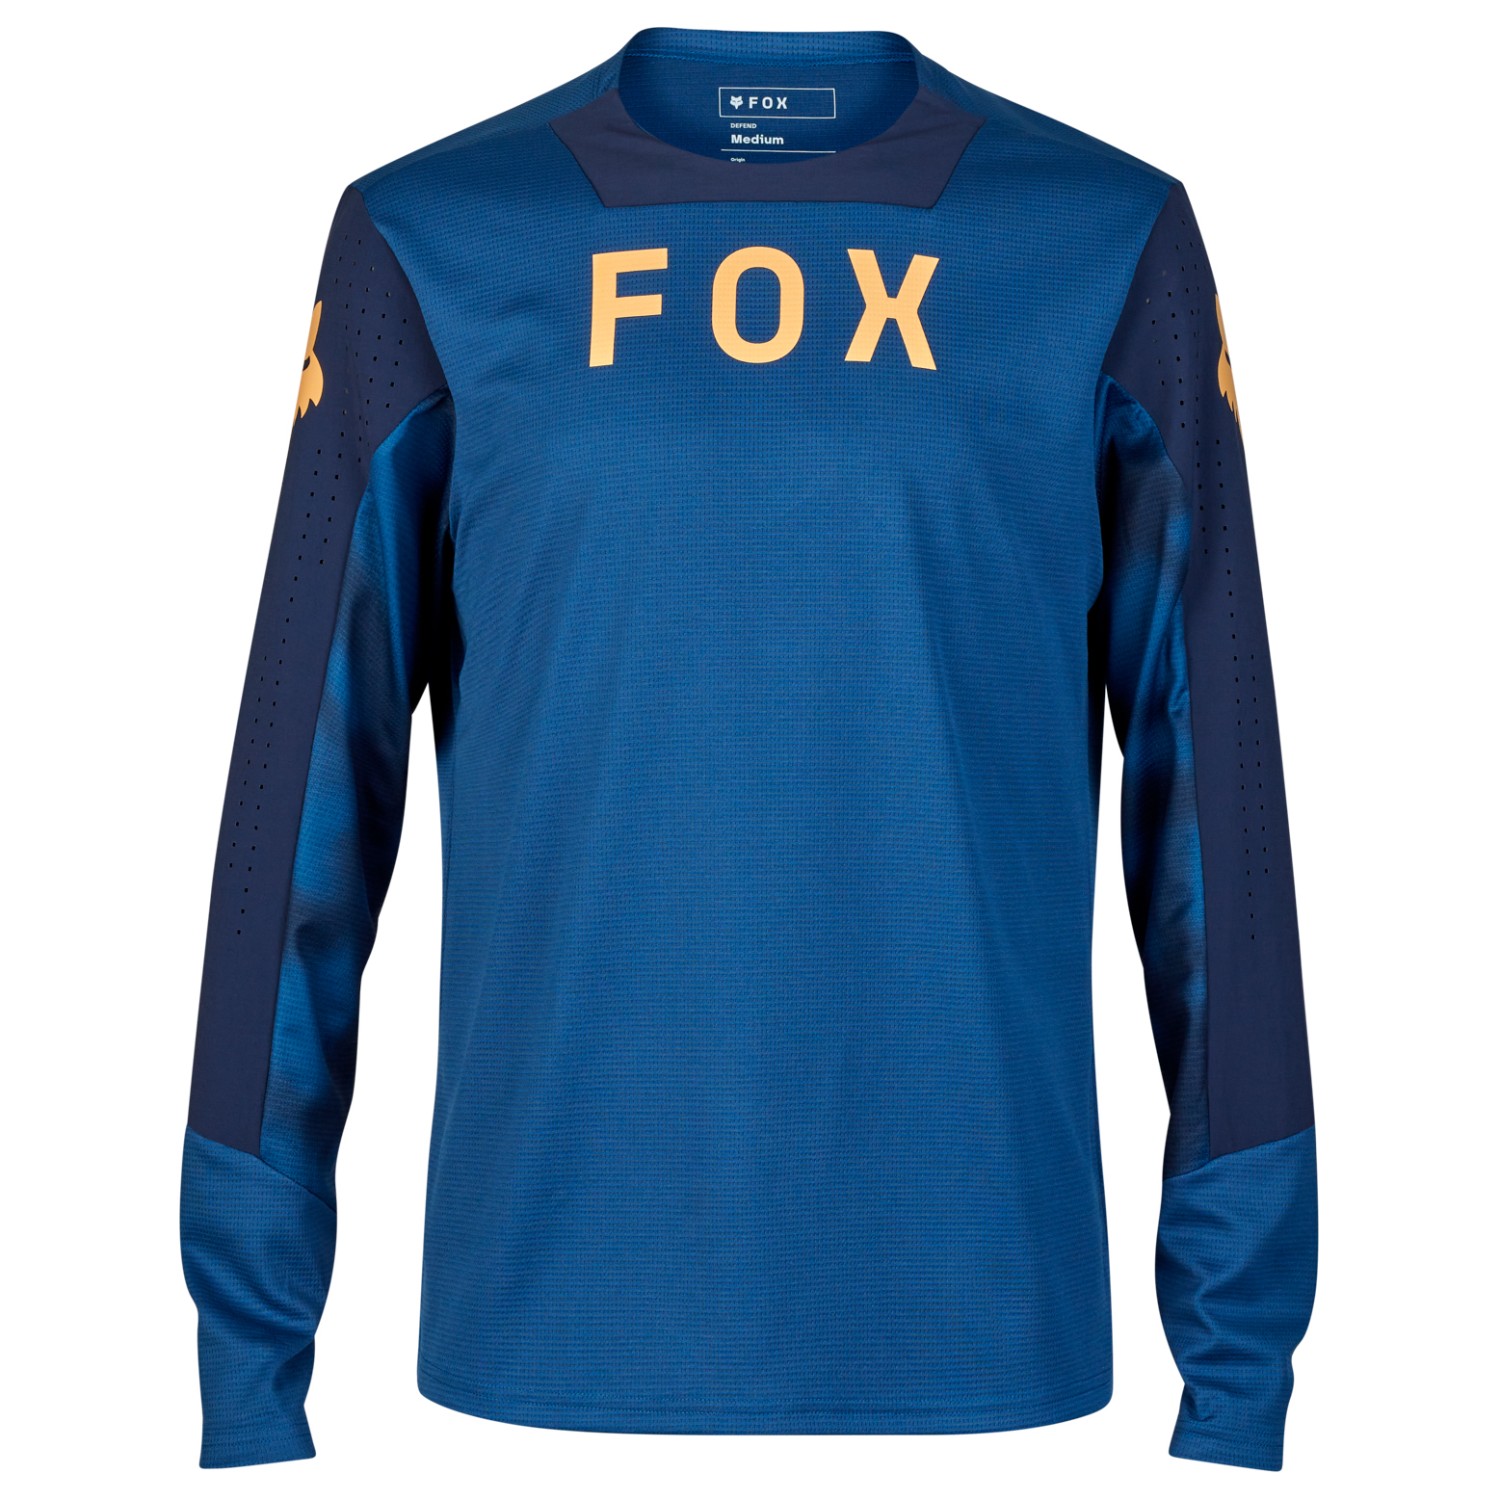 Велосипедный трикотаж Fox Racing Defend L/S Jersey Taunt, цвет Indigo new f1 racing jersey f1 team crew neck sweater racing jacket